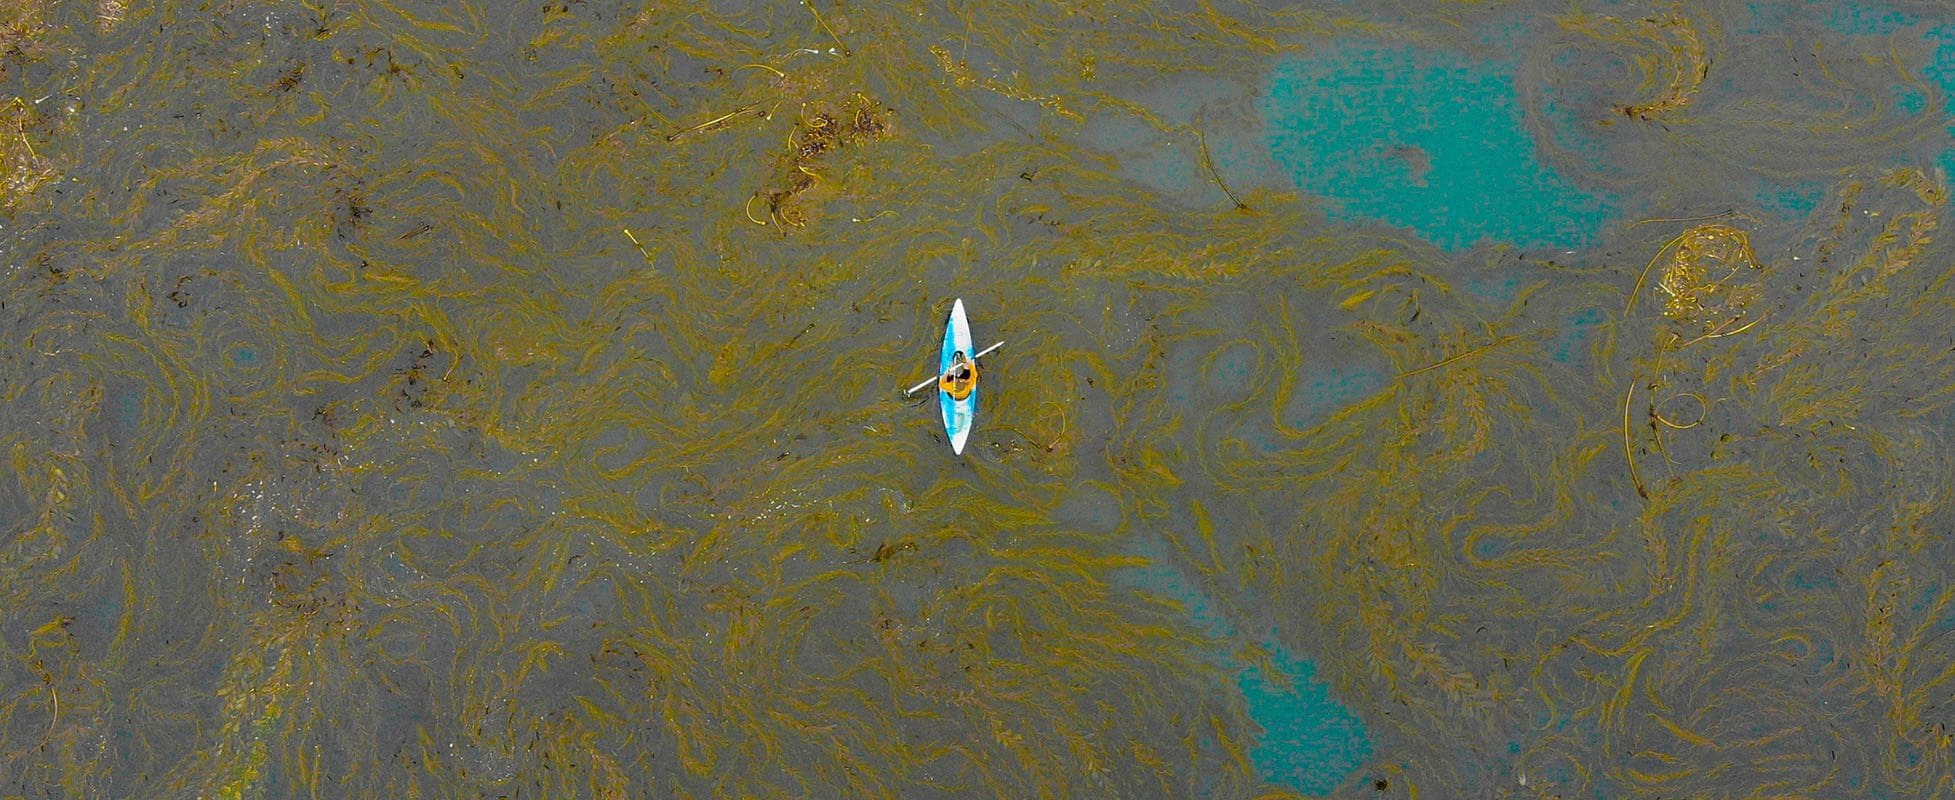 kayaker wading through oil spill